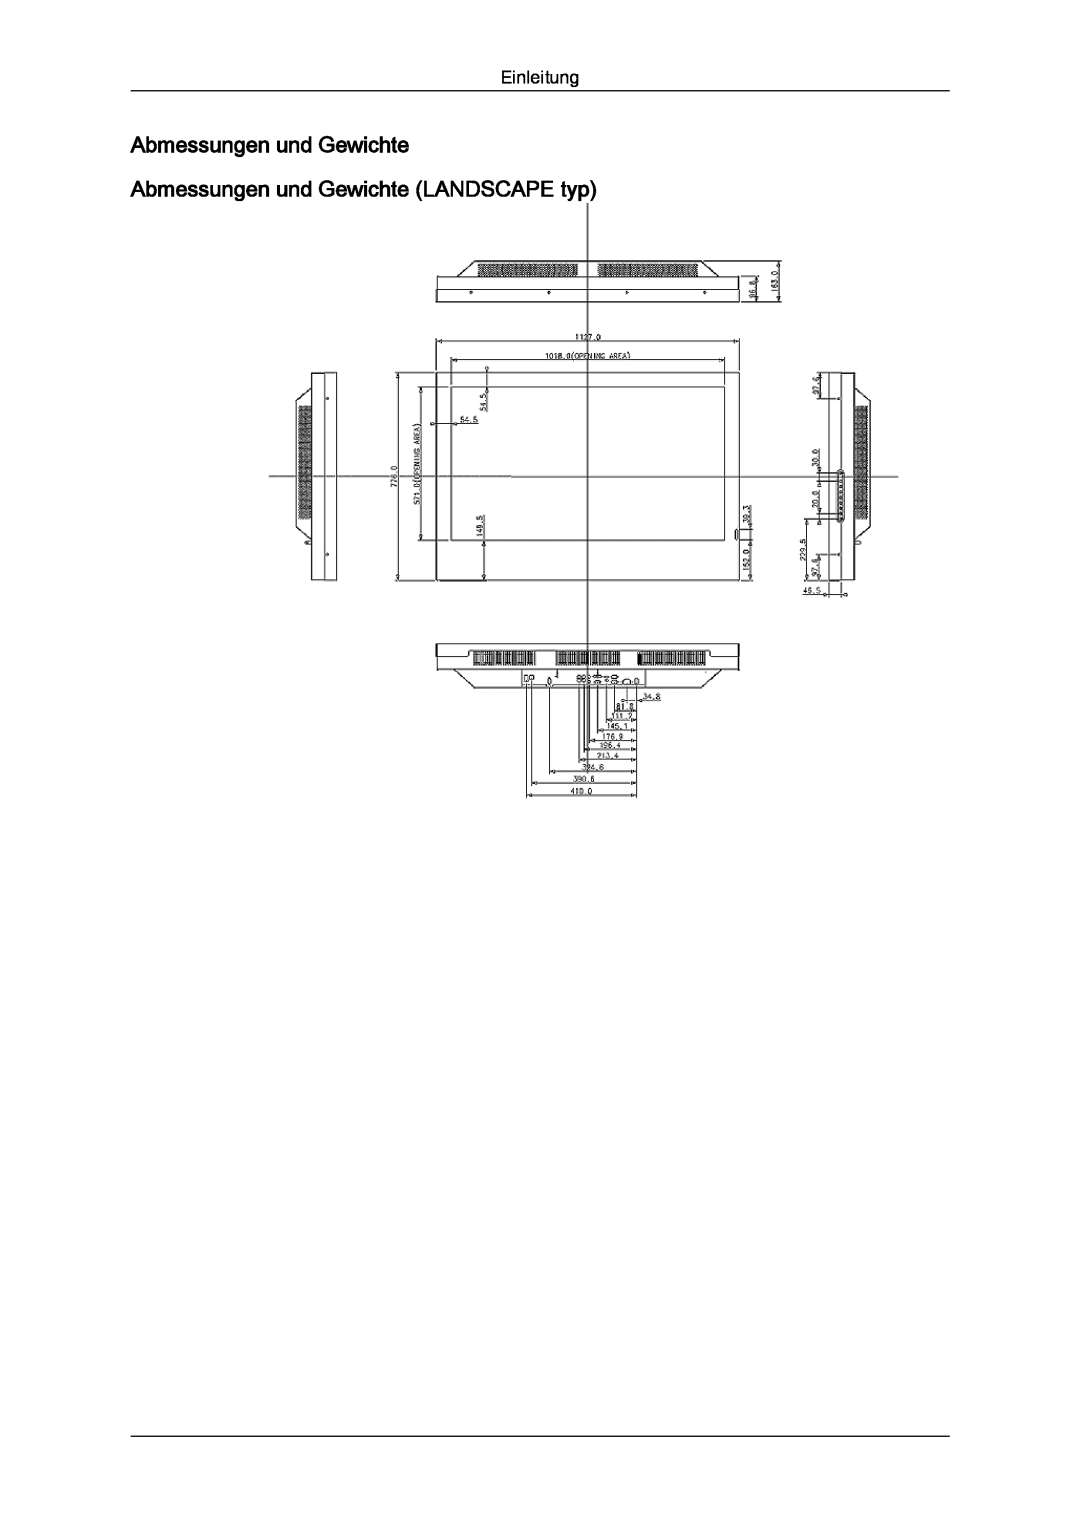 Samsung LH46SOQMSC/EN, LH46SOUQSC/EN manual Abmessungen und Gewichte Abmessungen und Gewichte LANDSCAPE typ, Einleitung 